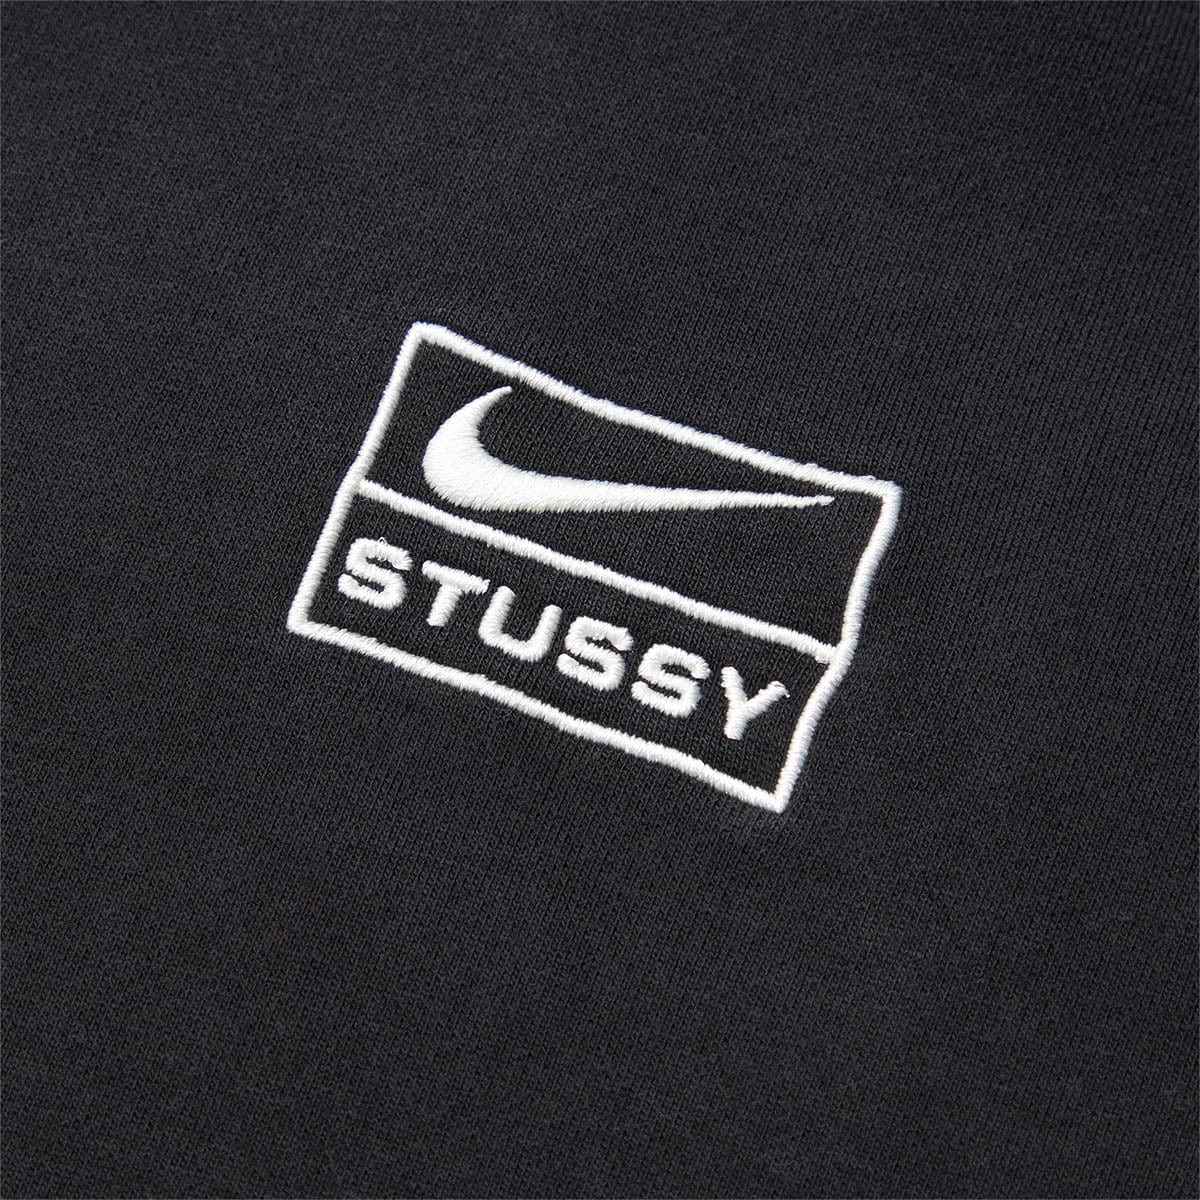 Nike Hoodies & Sweatshirts X STUSSY STONEWASHED BLACK HOODED SWEATSHIRT